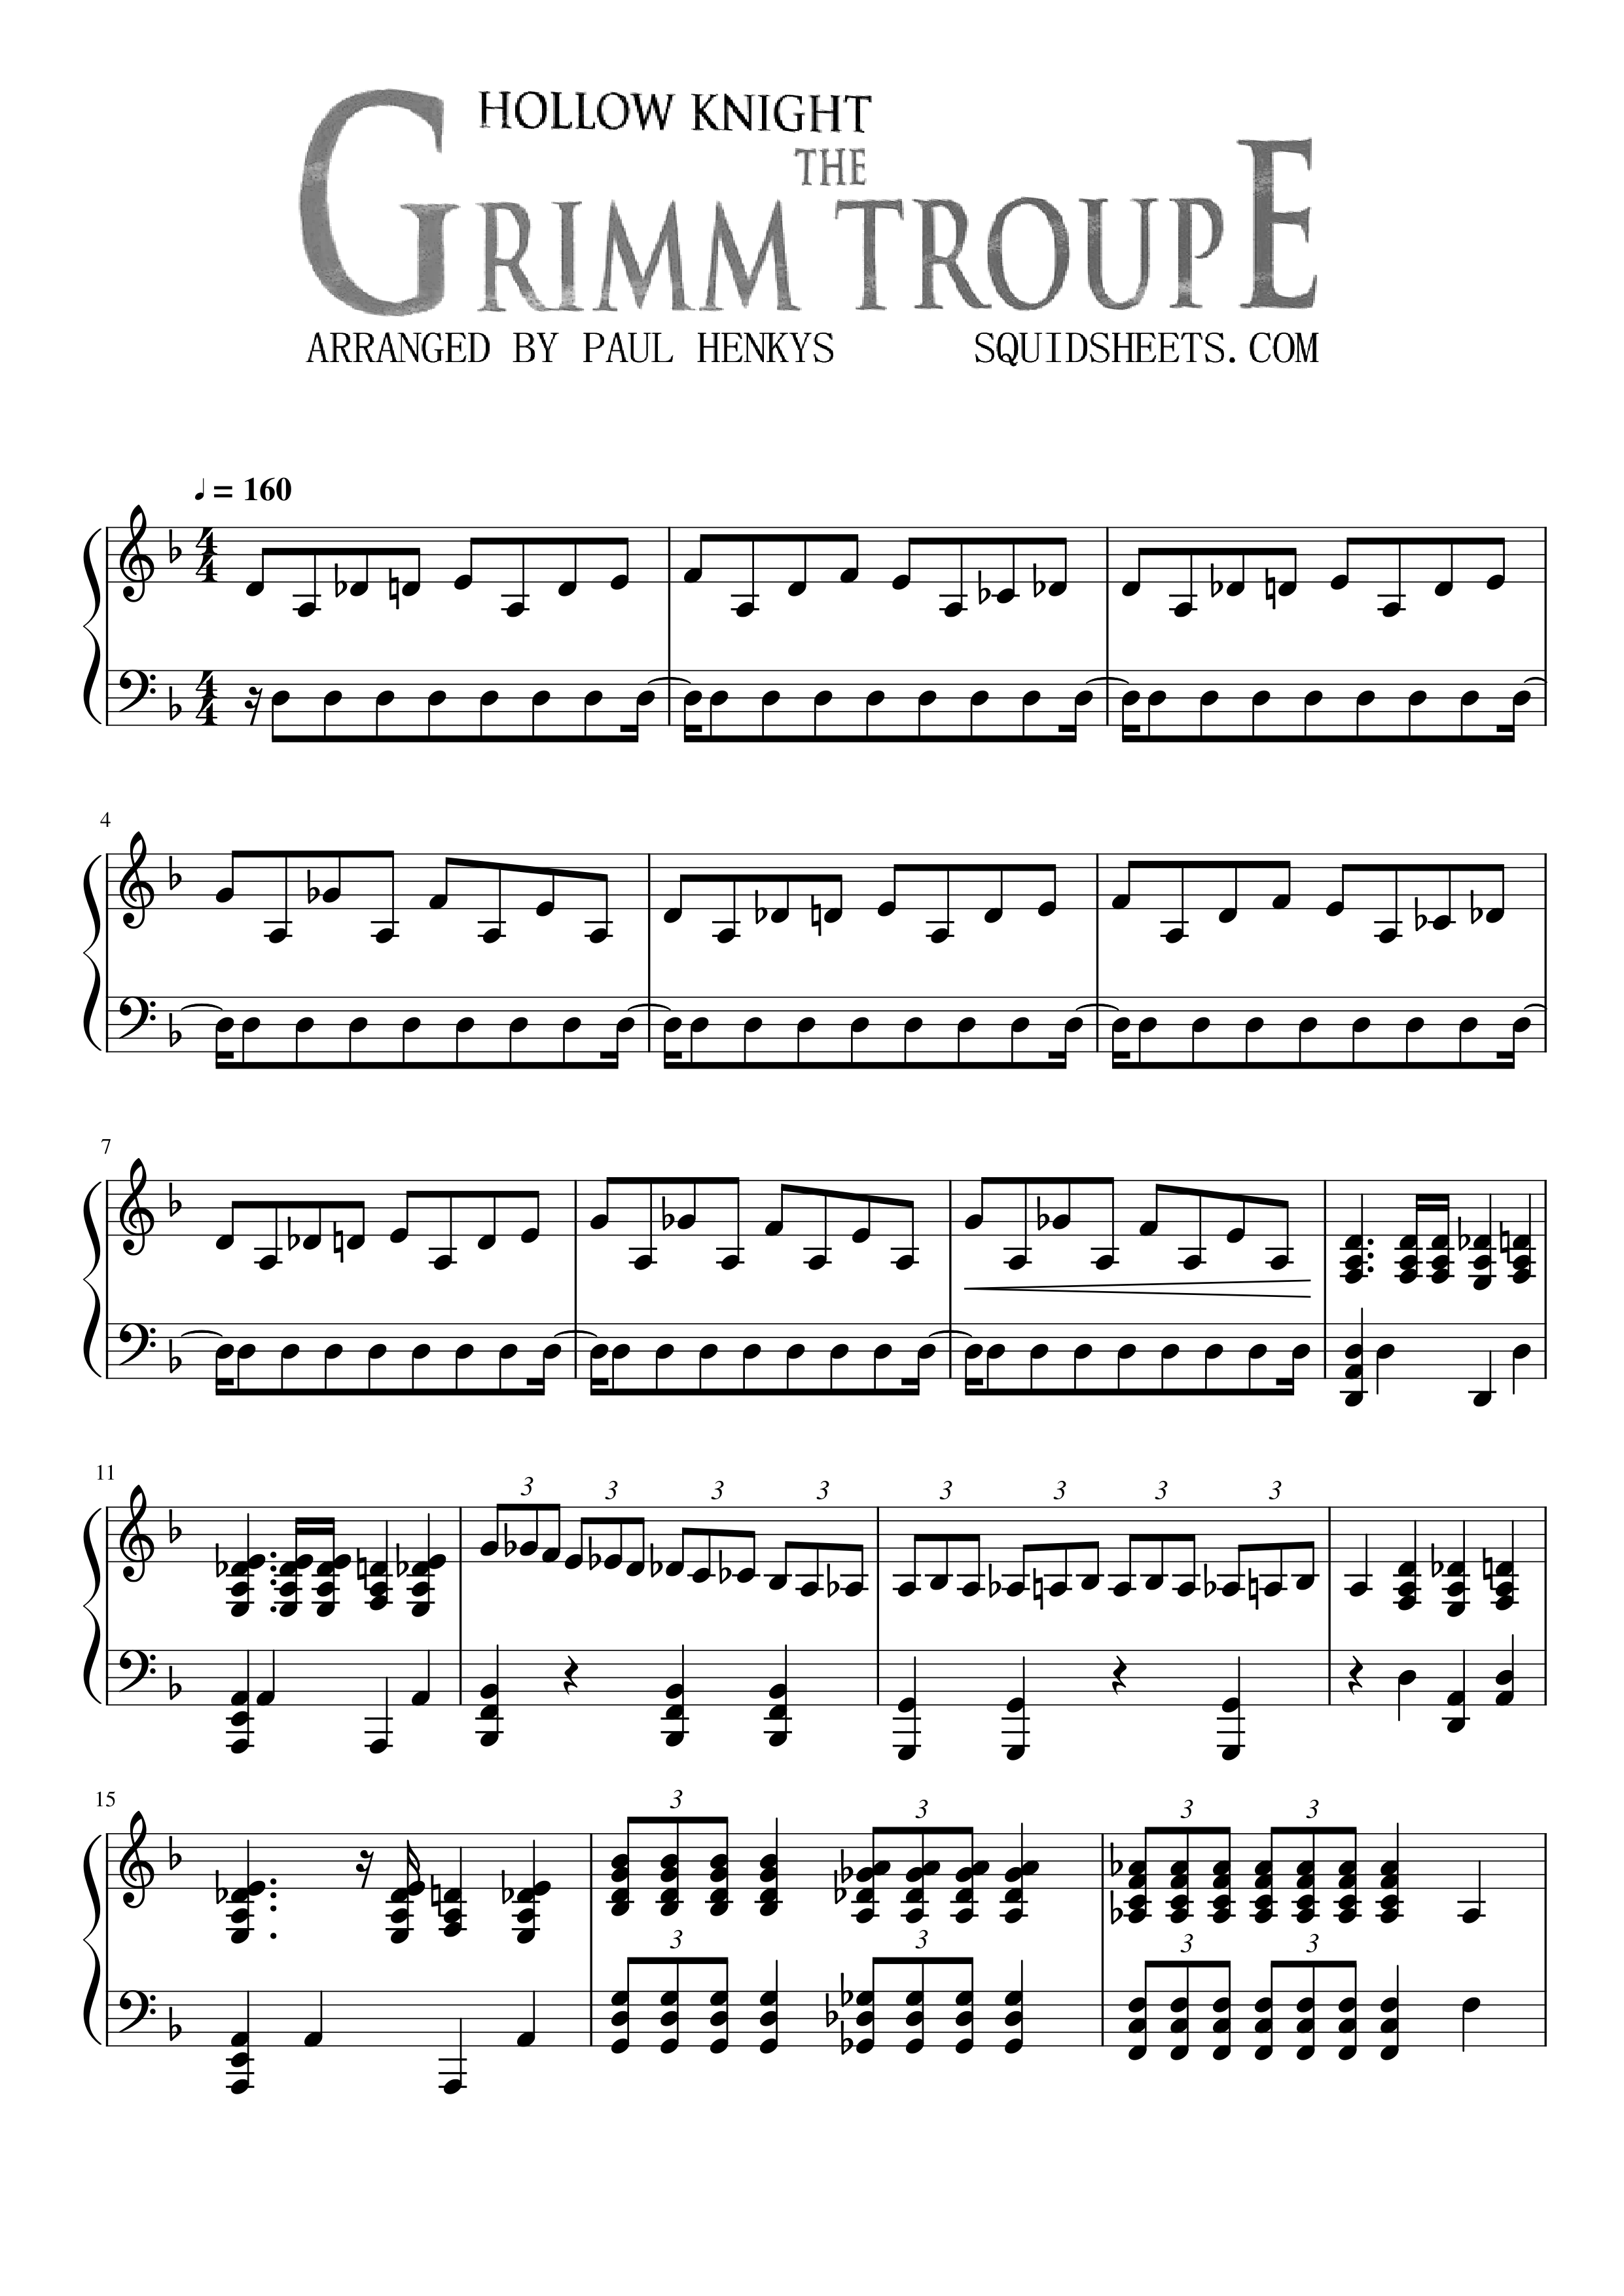 - Grimm Troupe Sheet Music - SquidSheets.com - Free Piano Sheet Music